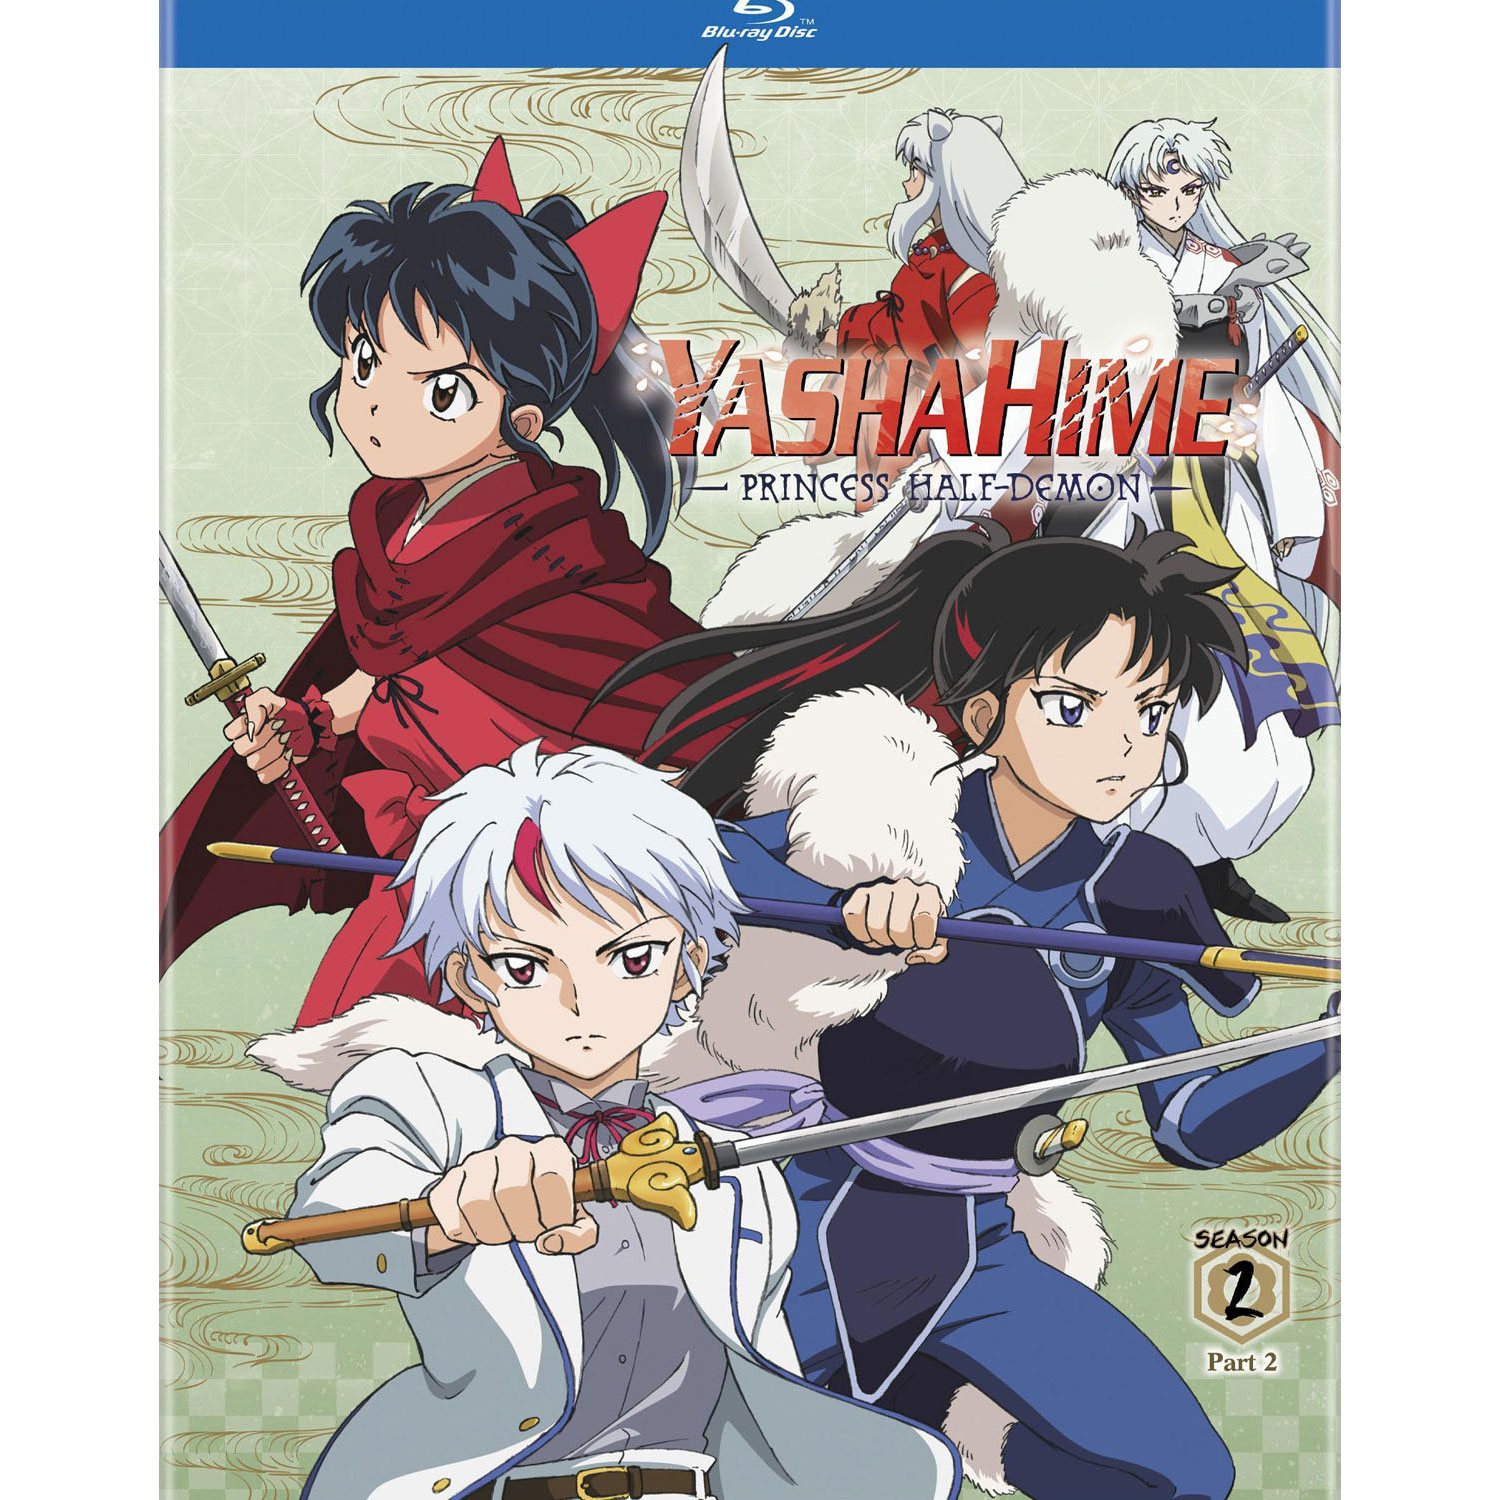 Yashahime: Princess Half-Demon Season 2 Part 2 (English) (Blu-ray) (2023)